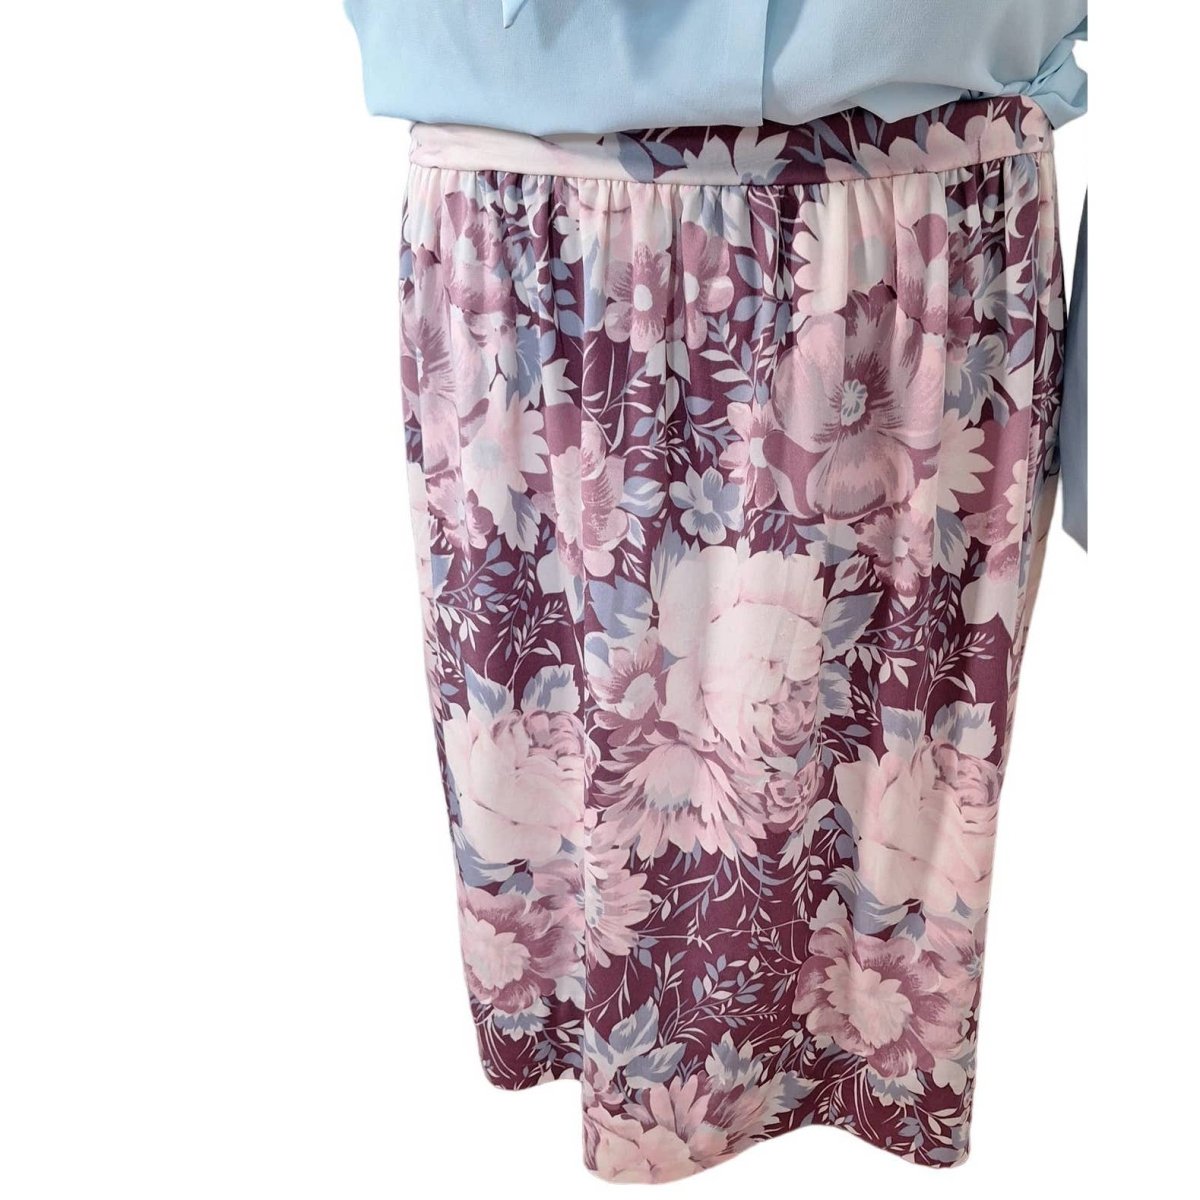 Vintage 70s/80s Mauve Rose Print Skirt Women's Size M/L/XL Waist 30" to 38" - themallvintage The Mall Vintage